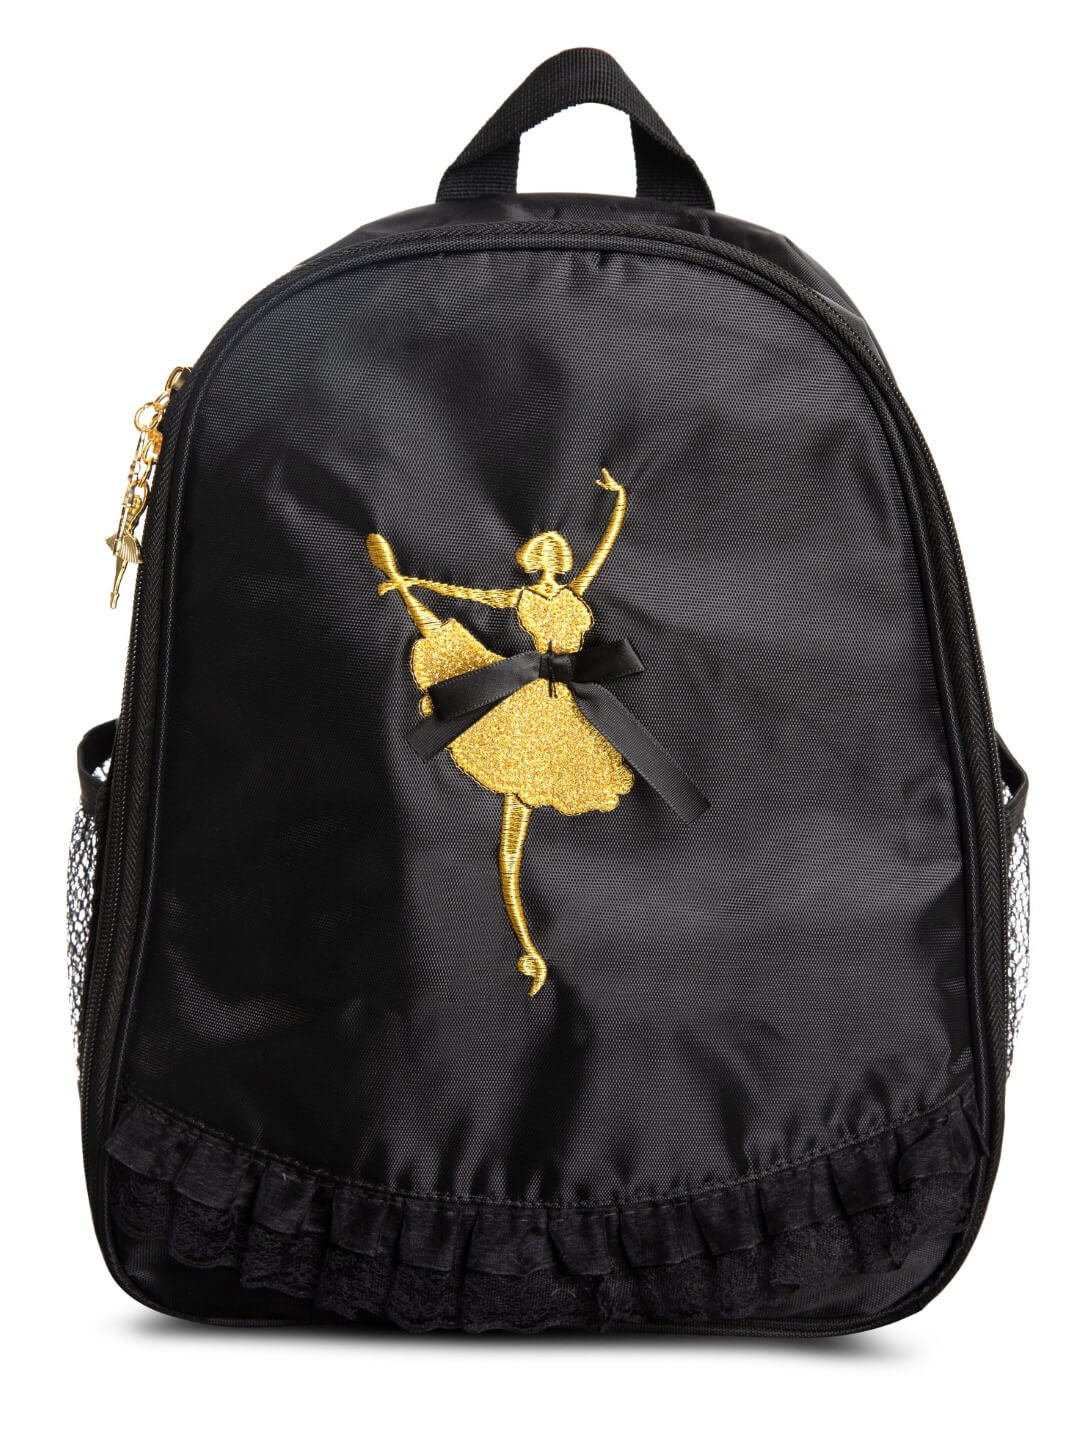 Ballet Bow Backpack